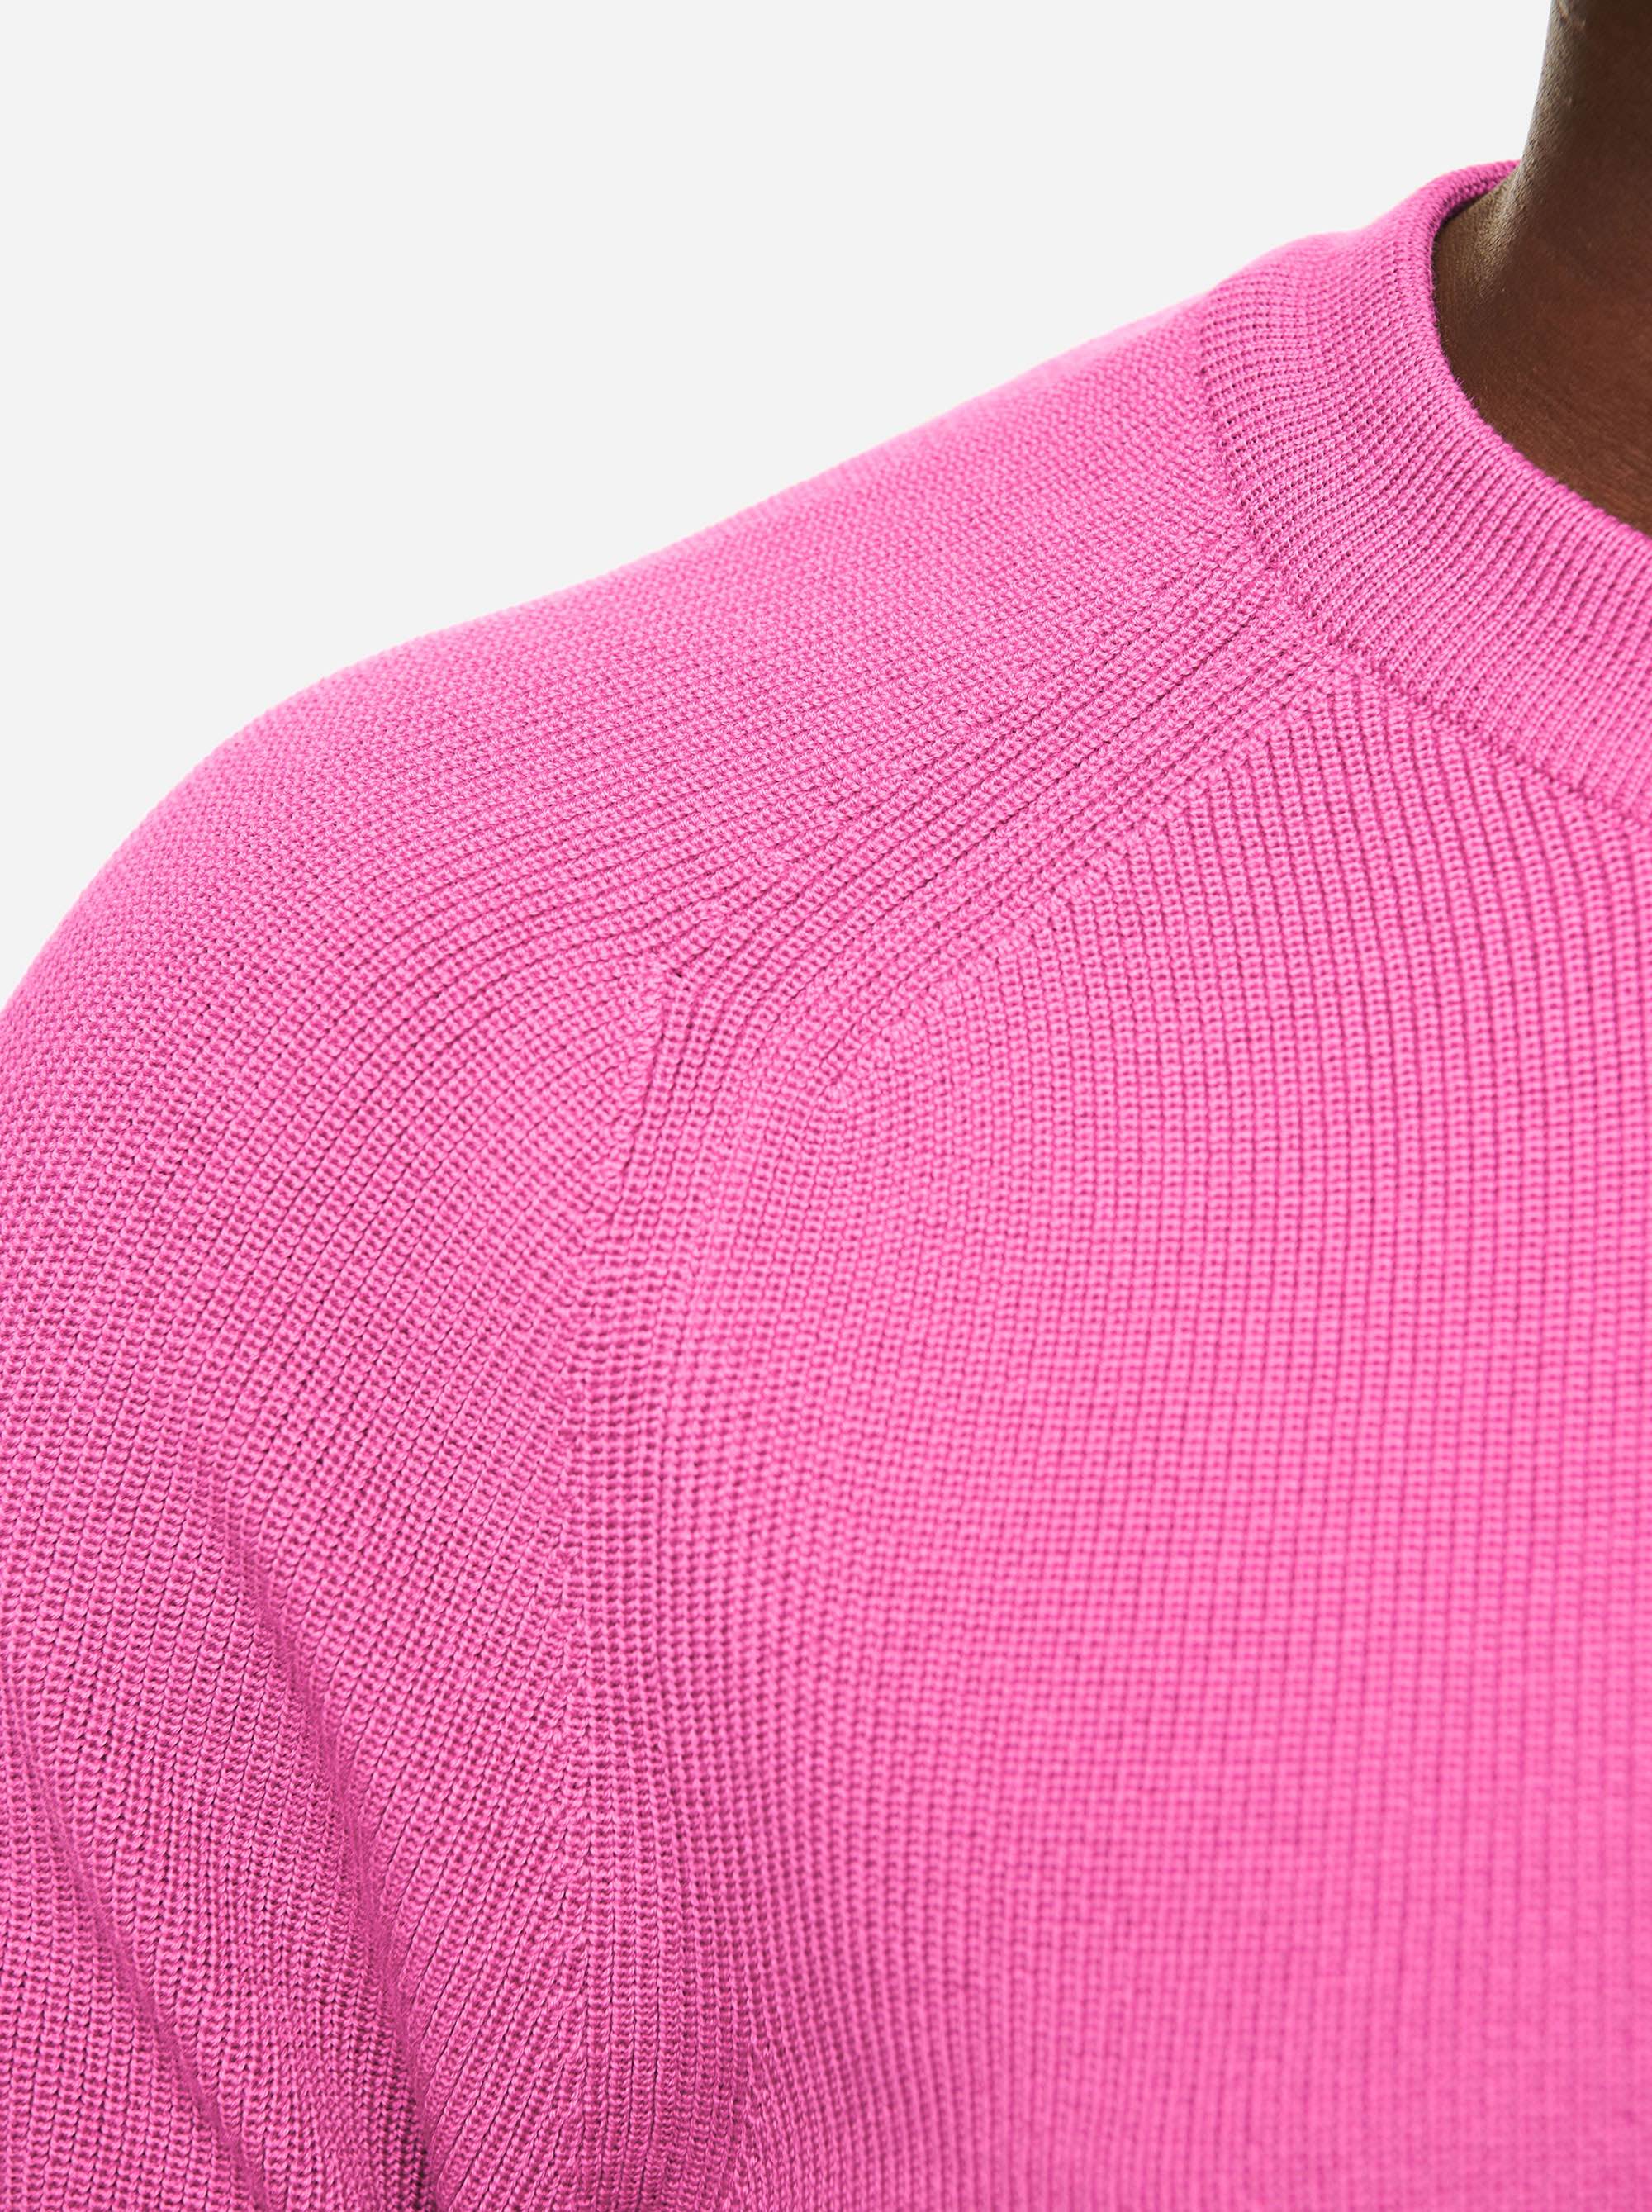 Teym - Crewneck - The Merino Sweater - Men - Bright Pink - 2